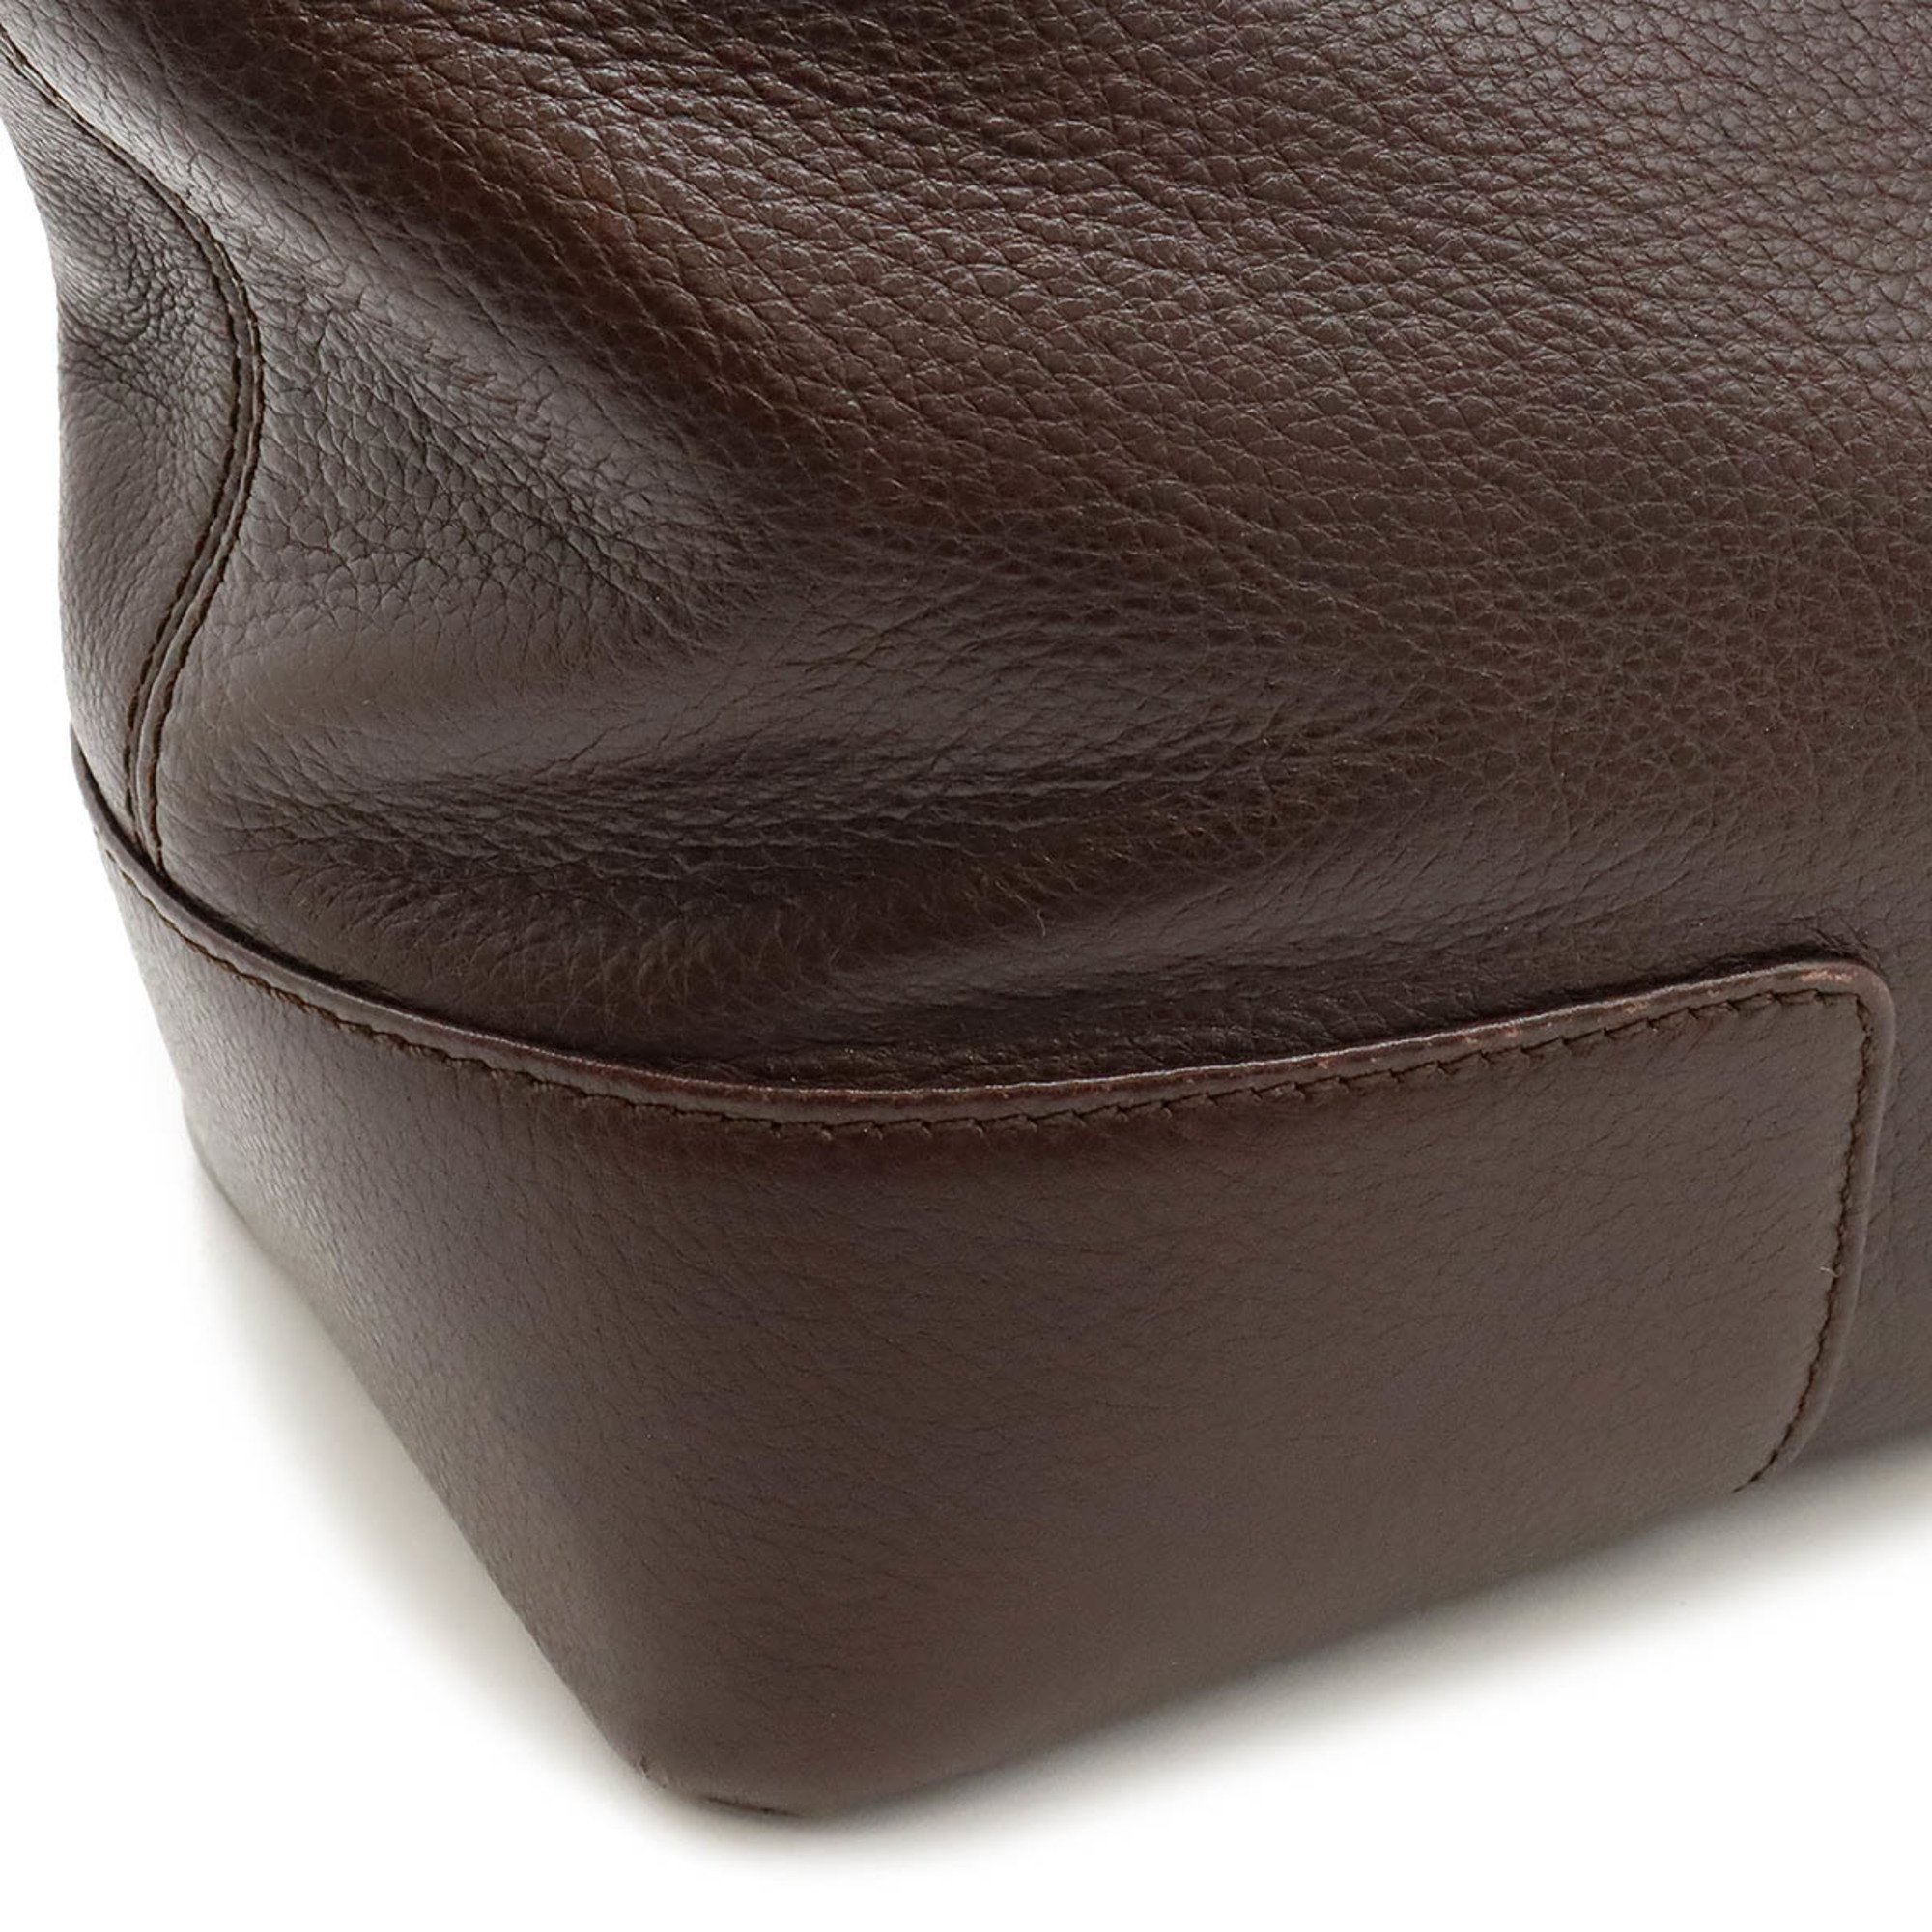 LOEWE Fusta Anagram Amazona Tote Bag Handbag Leather Dark Brown